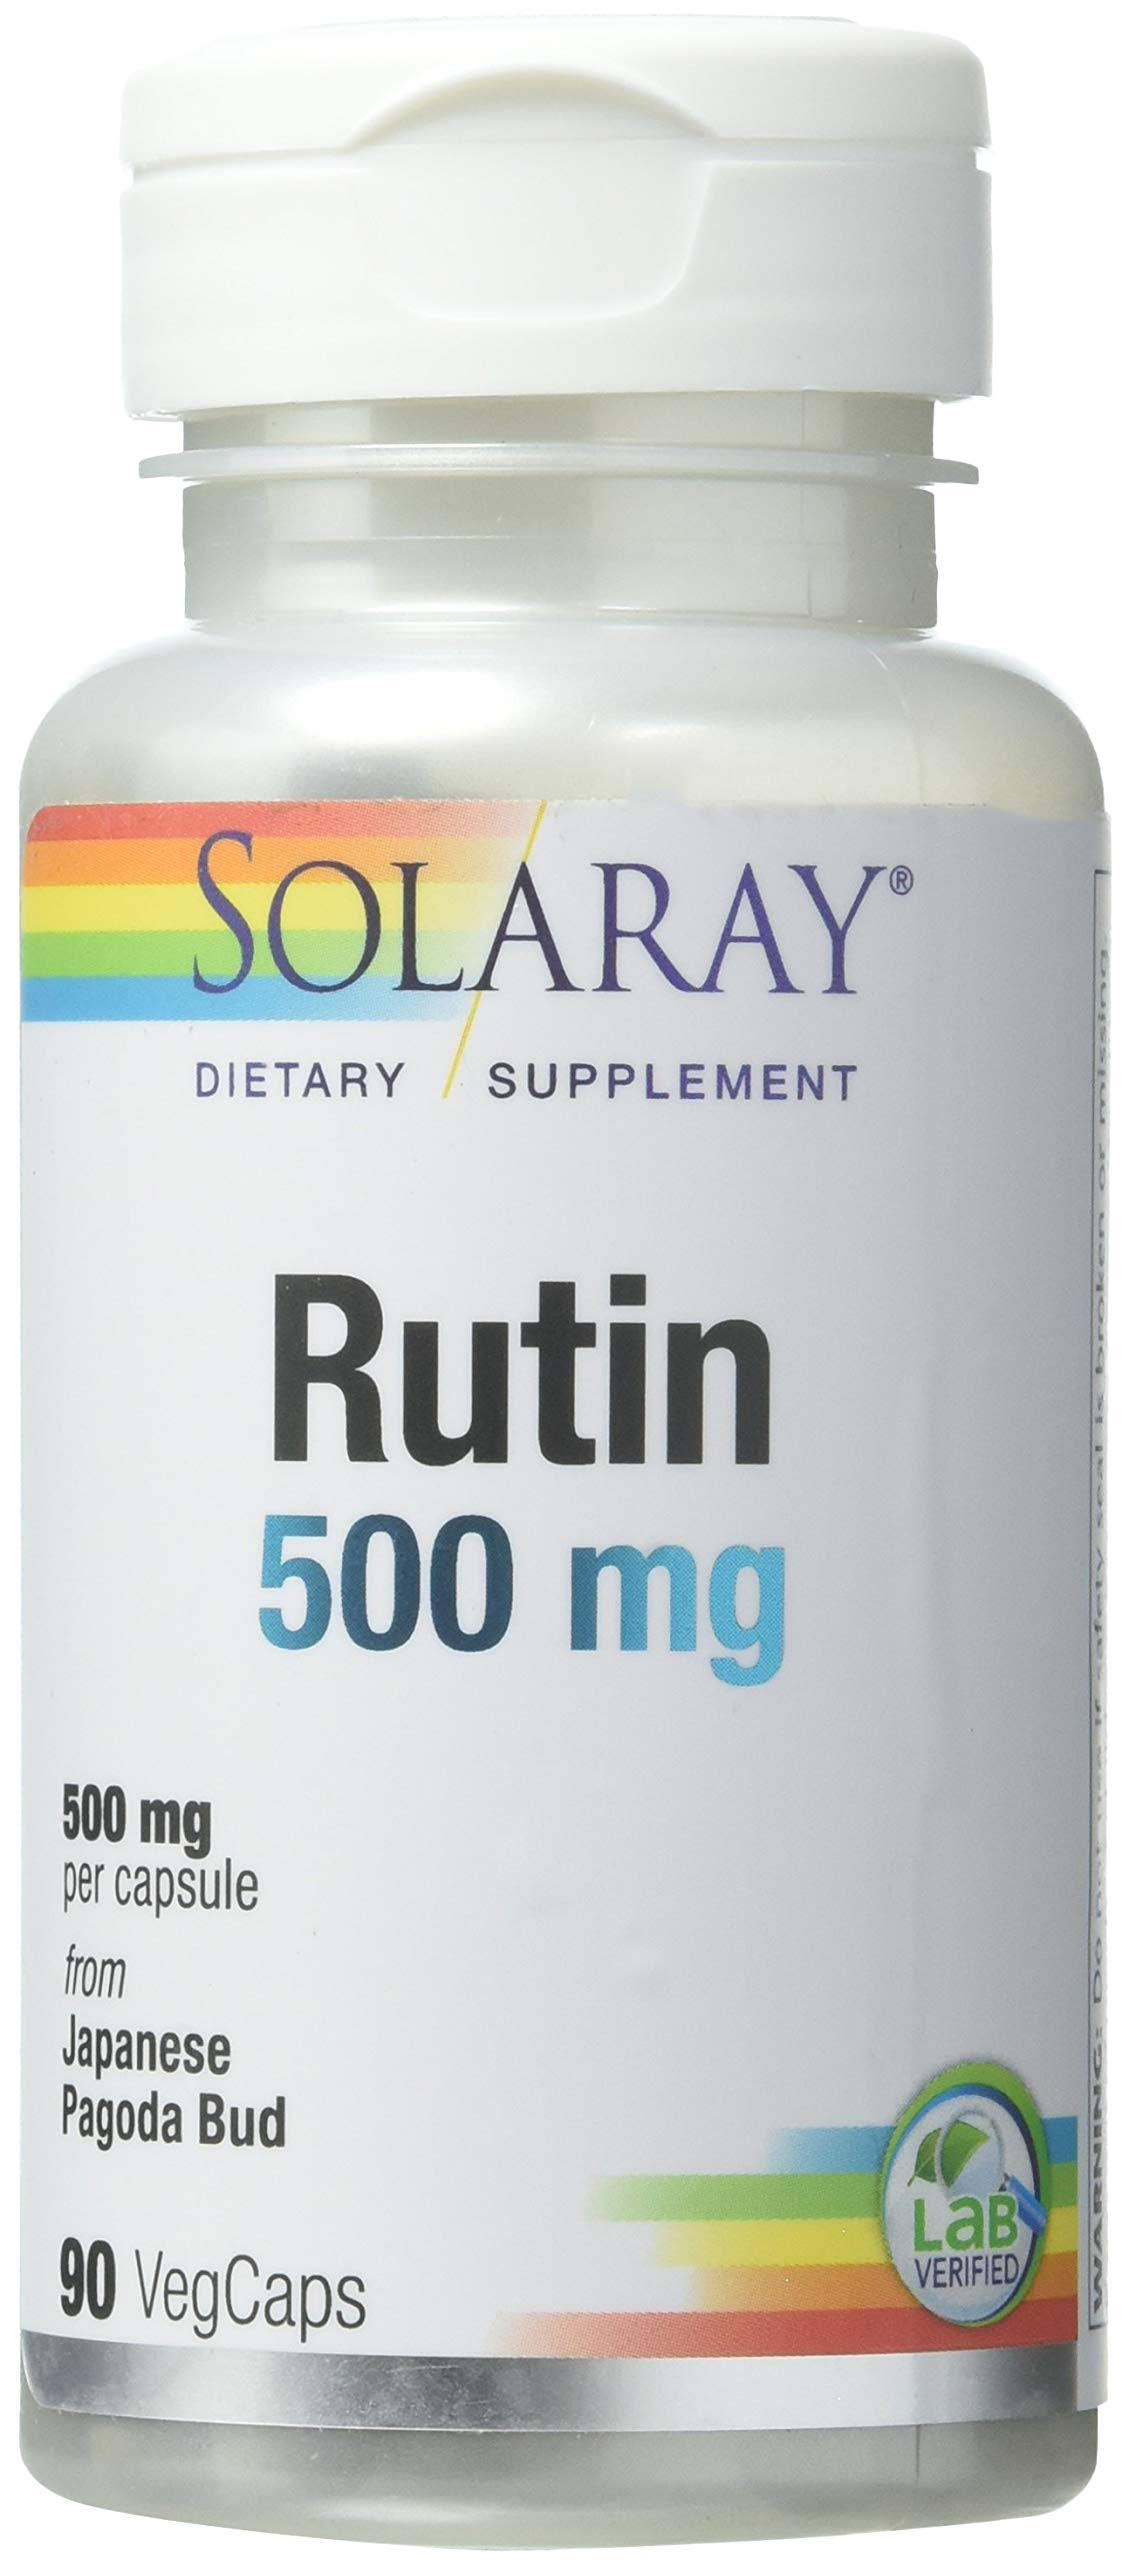 Solaray Rutin 500 mg - 90 VegCaps